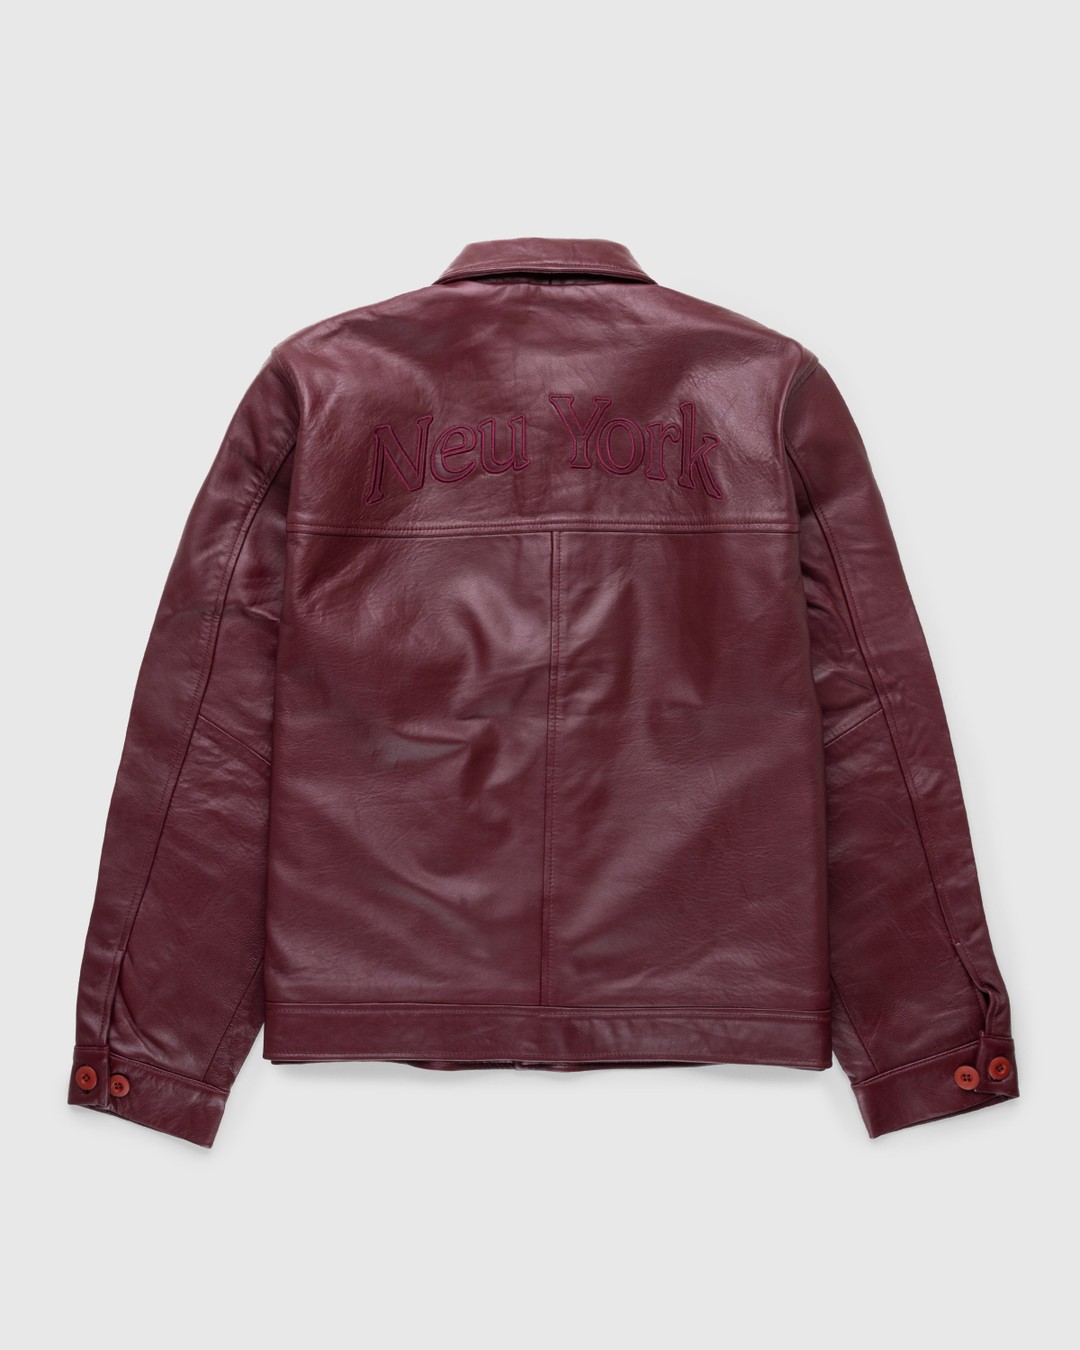 Highsnobiety – Neu York Leather Jacket Burgundy - Outerwear - Red - Image 1